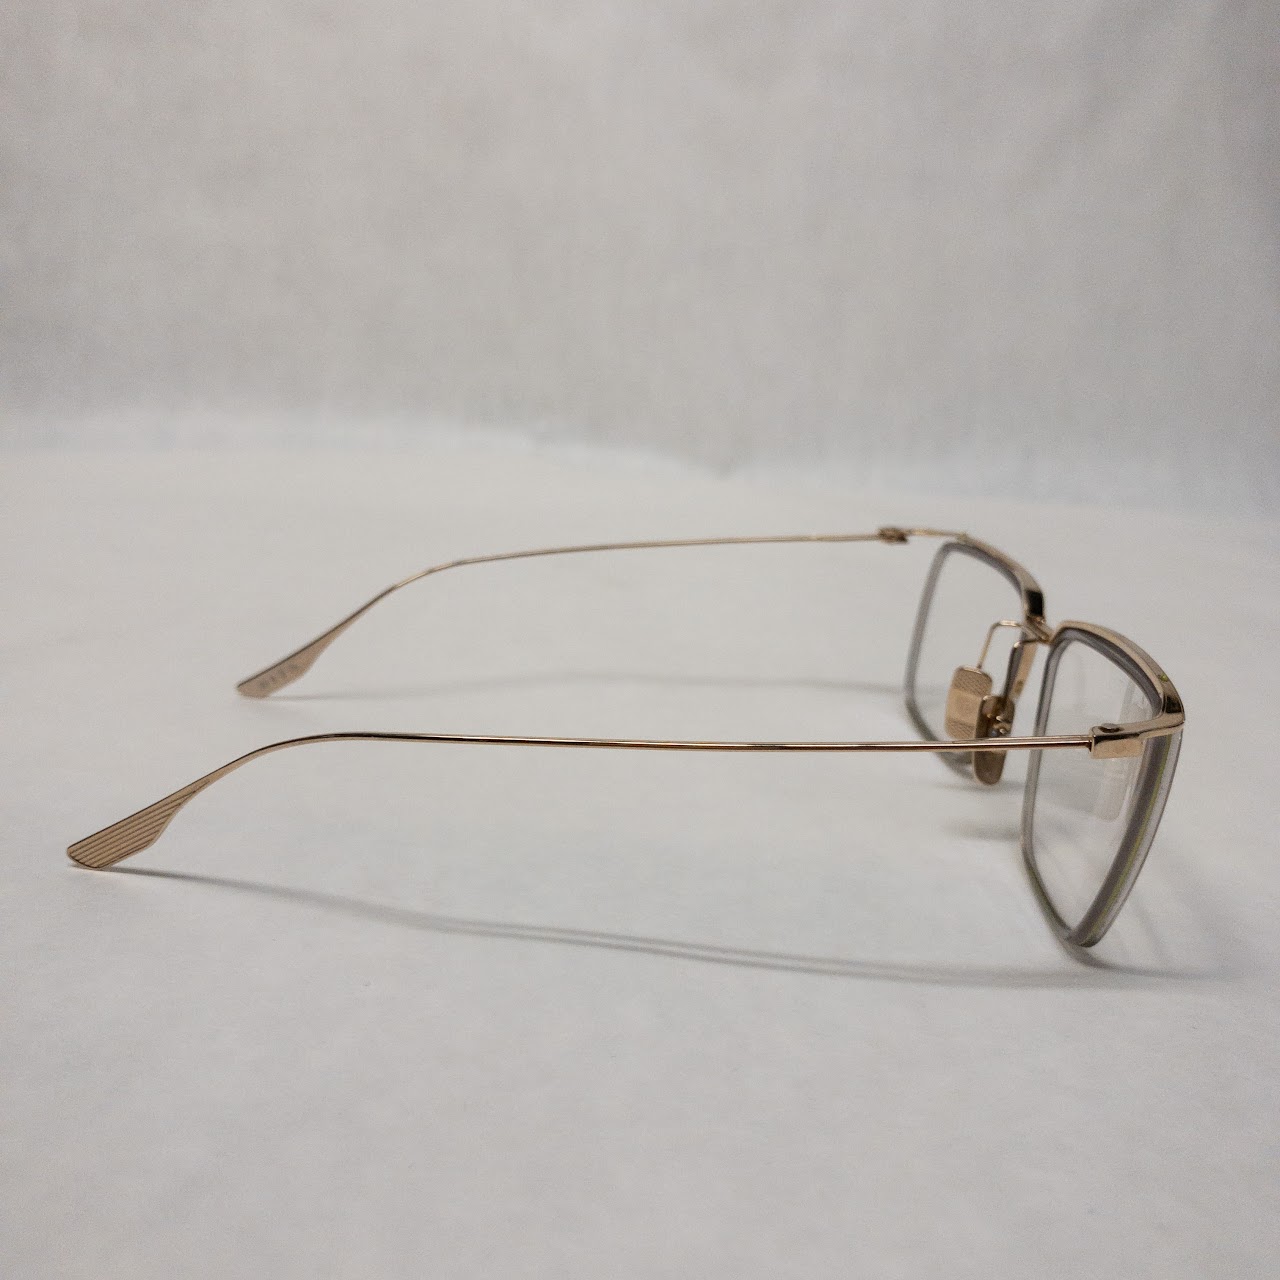 Dita Schema-One Rx Glasses